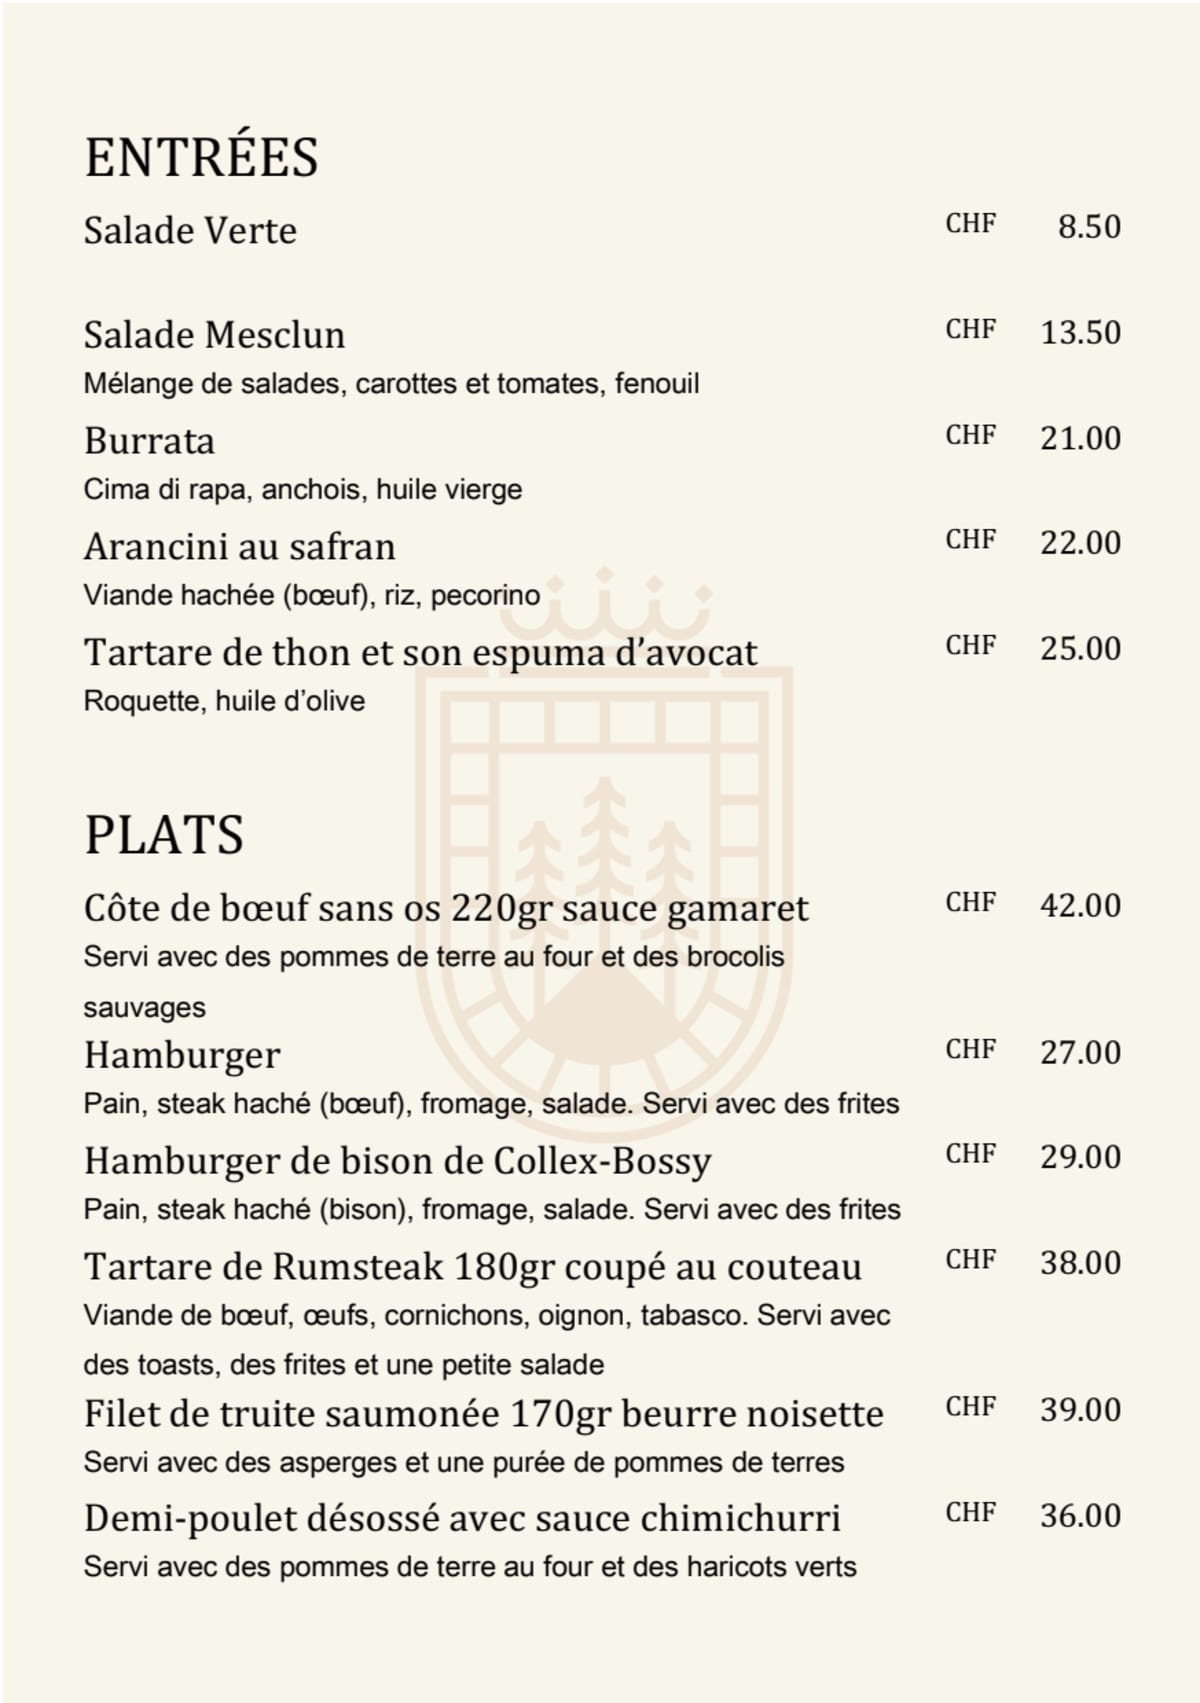 Auberge de la Couronne menu